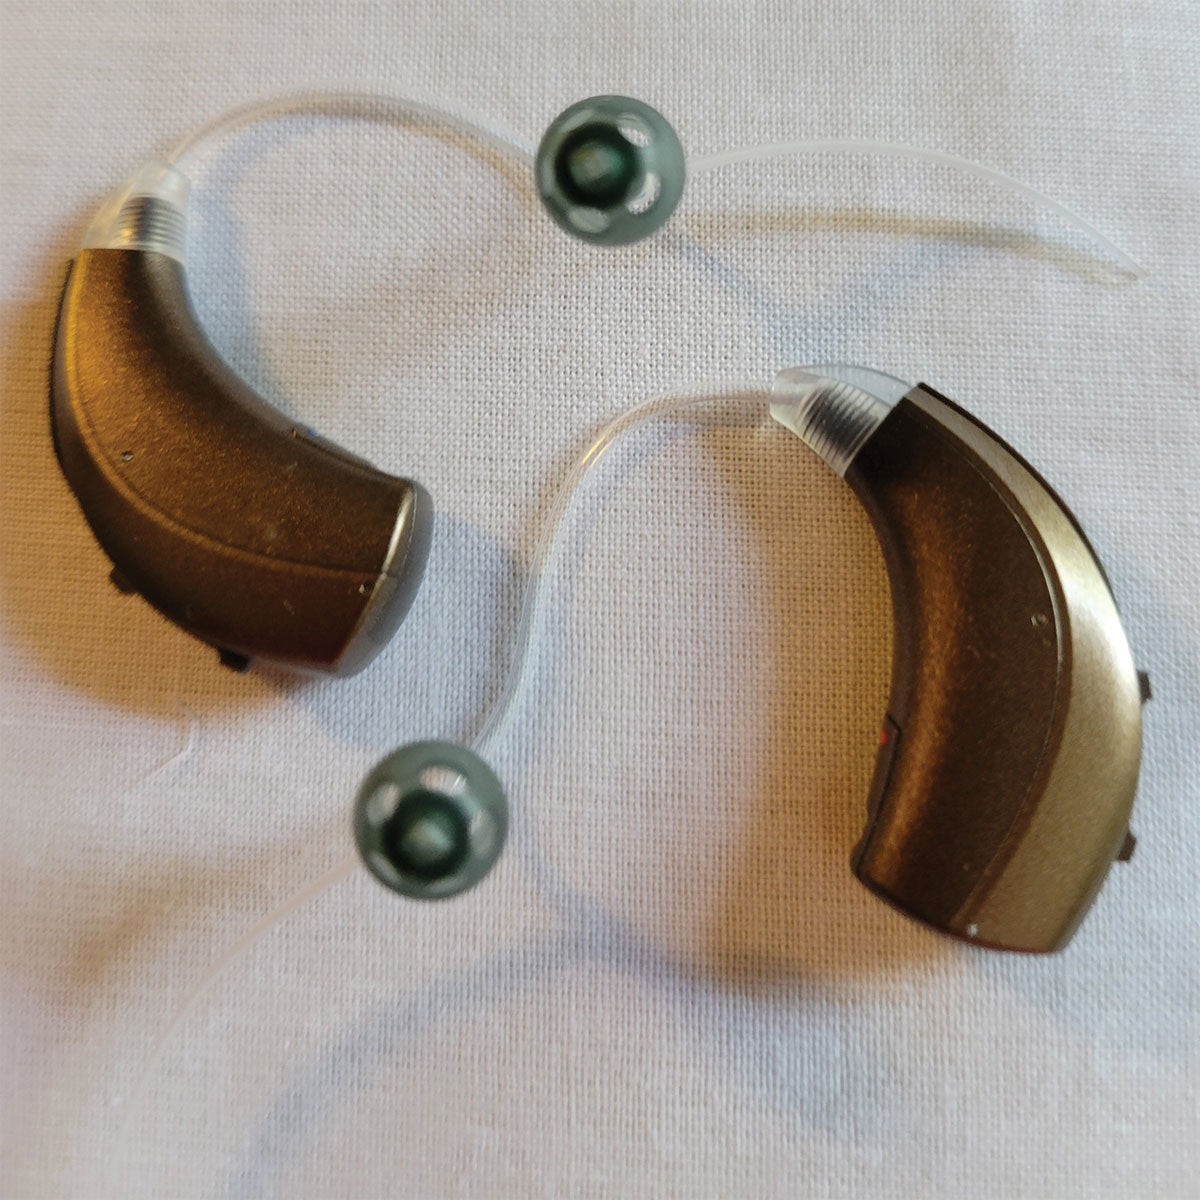 Doctor Choice TLinks Binaural earpieces